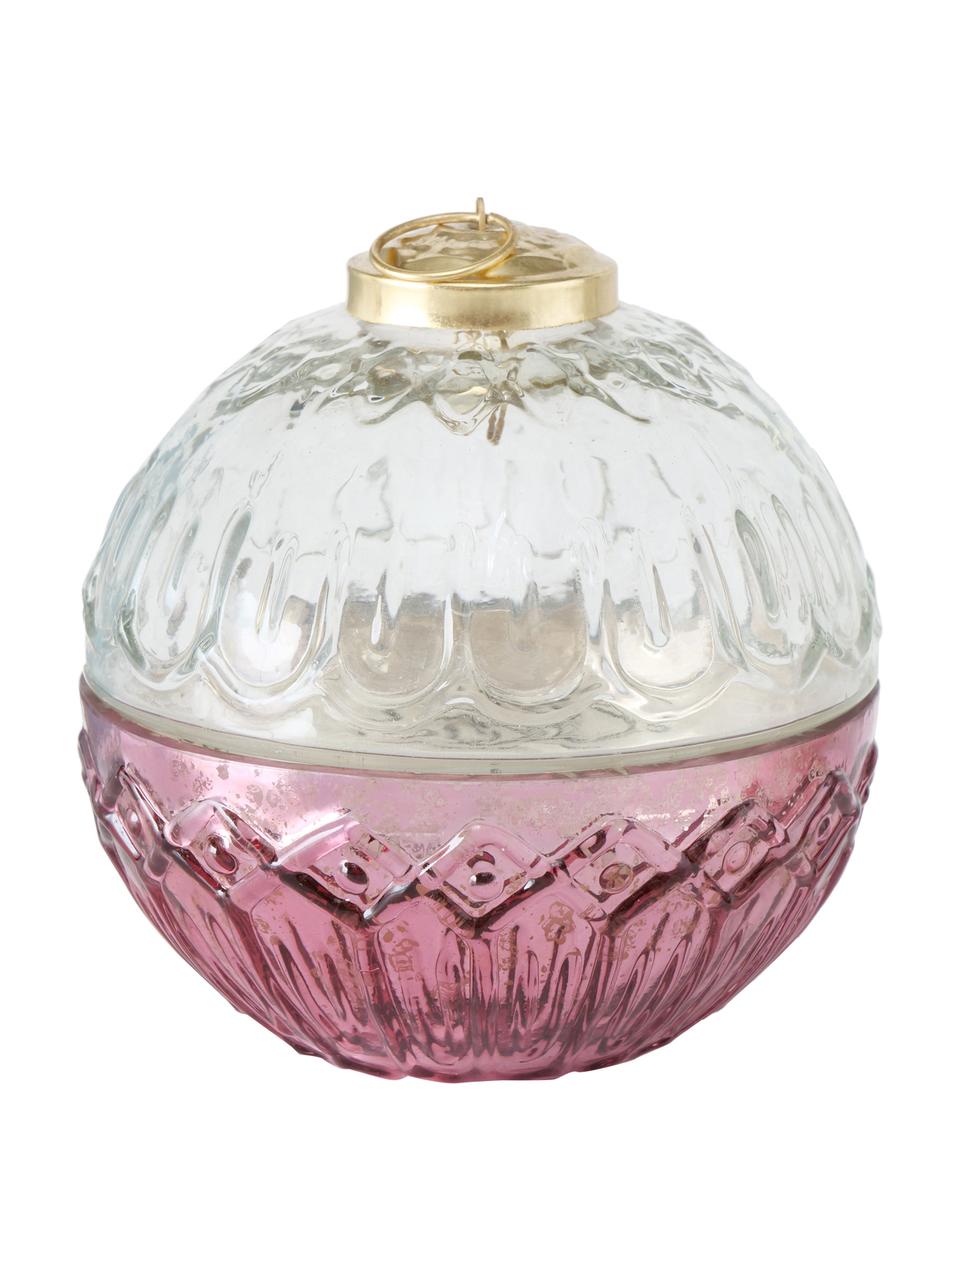 Duftkerzen-Set Camity (Vanilla), 2-tlg., Behälter: Glas, lackiert, Transparent, Rosa, Goldfarben, Ø 10 cm